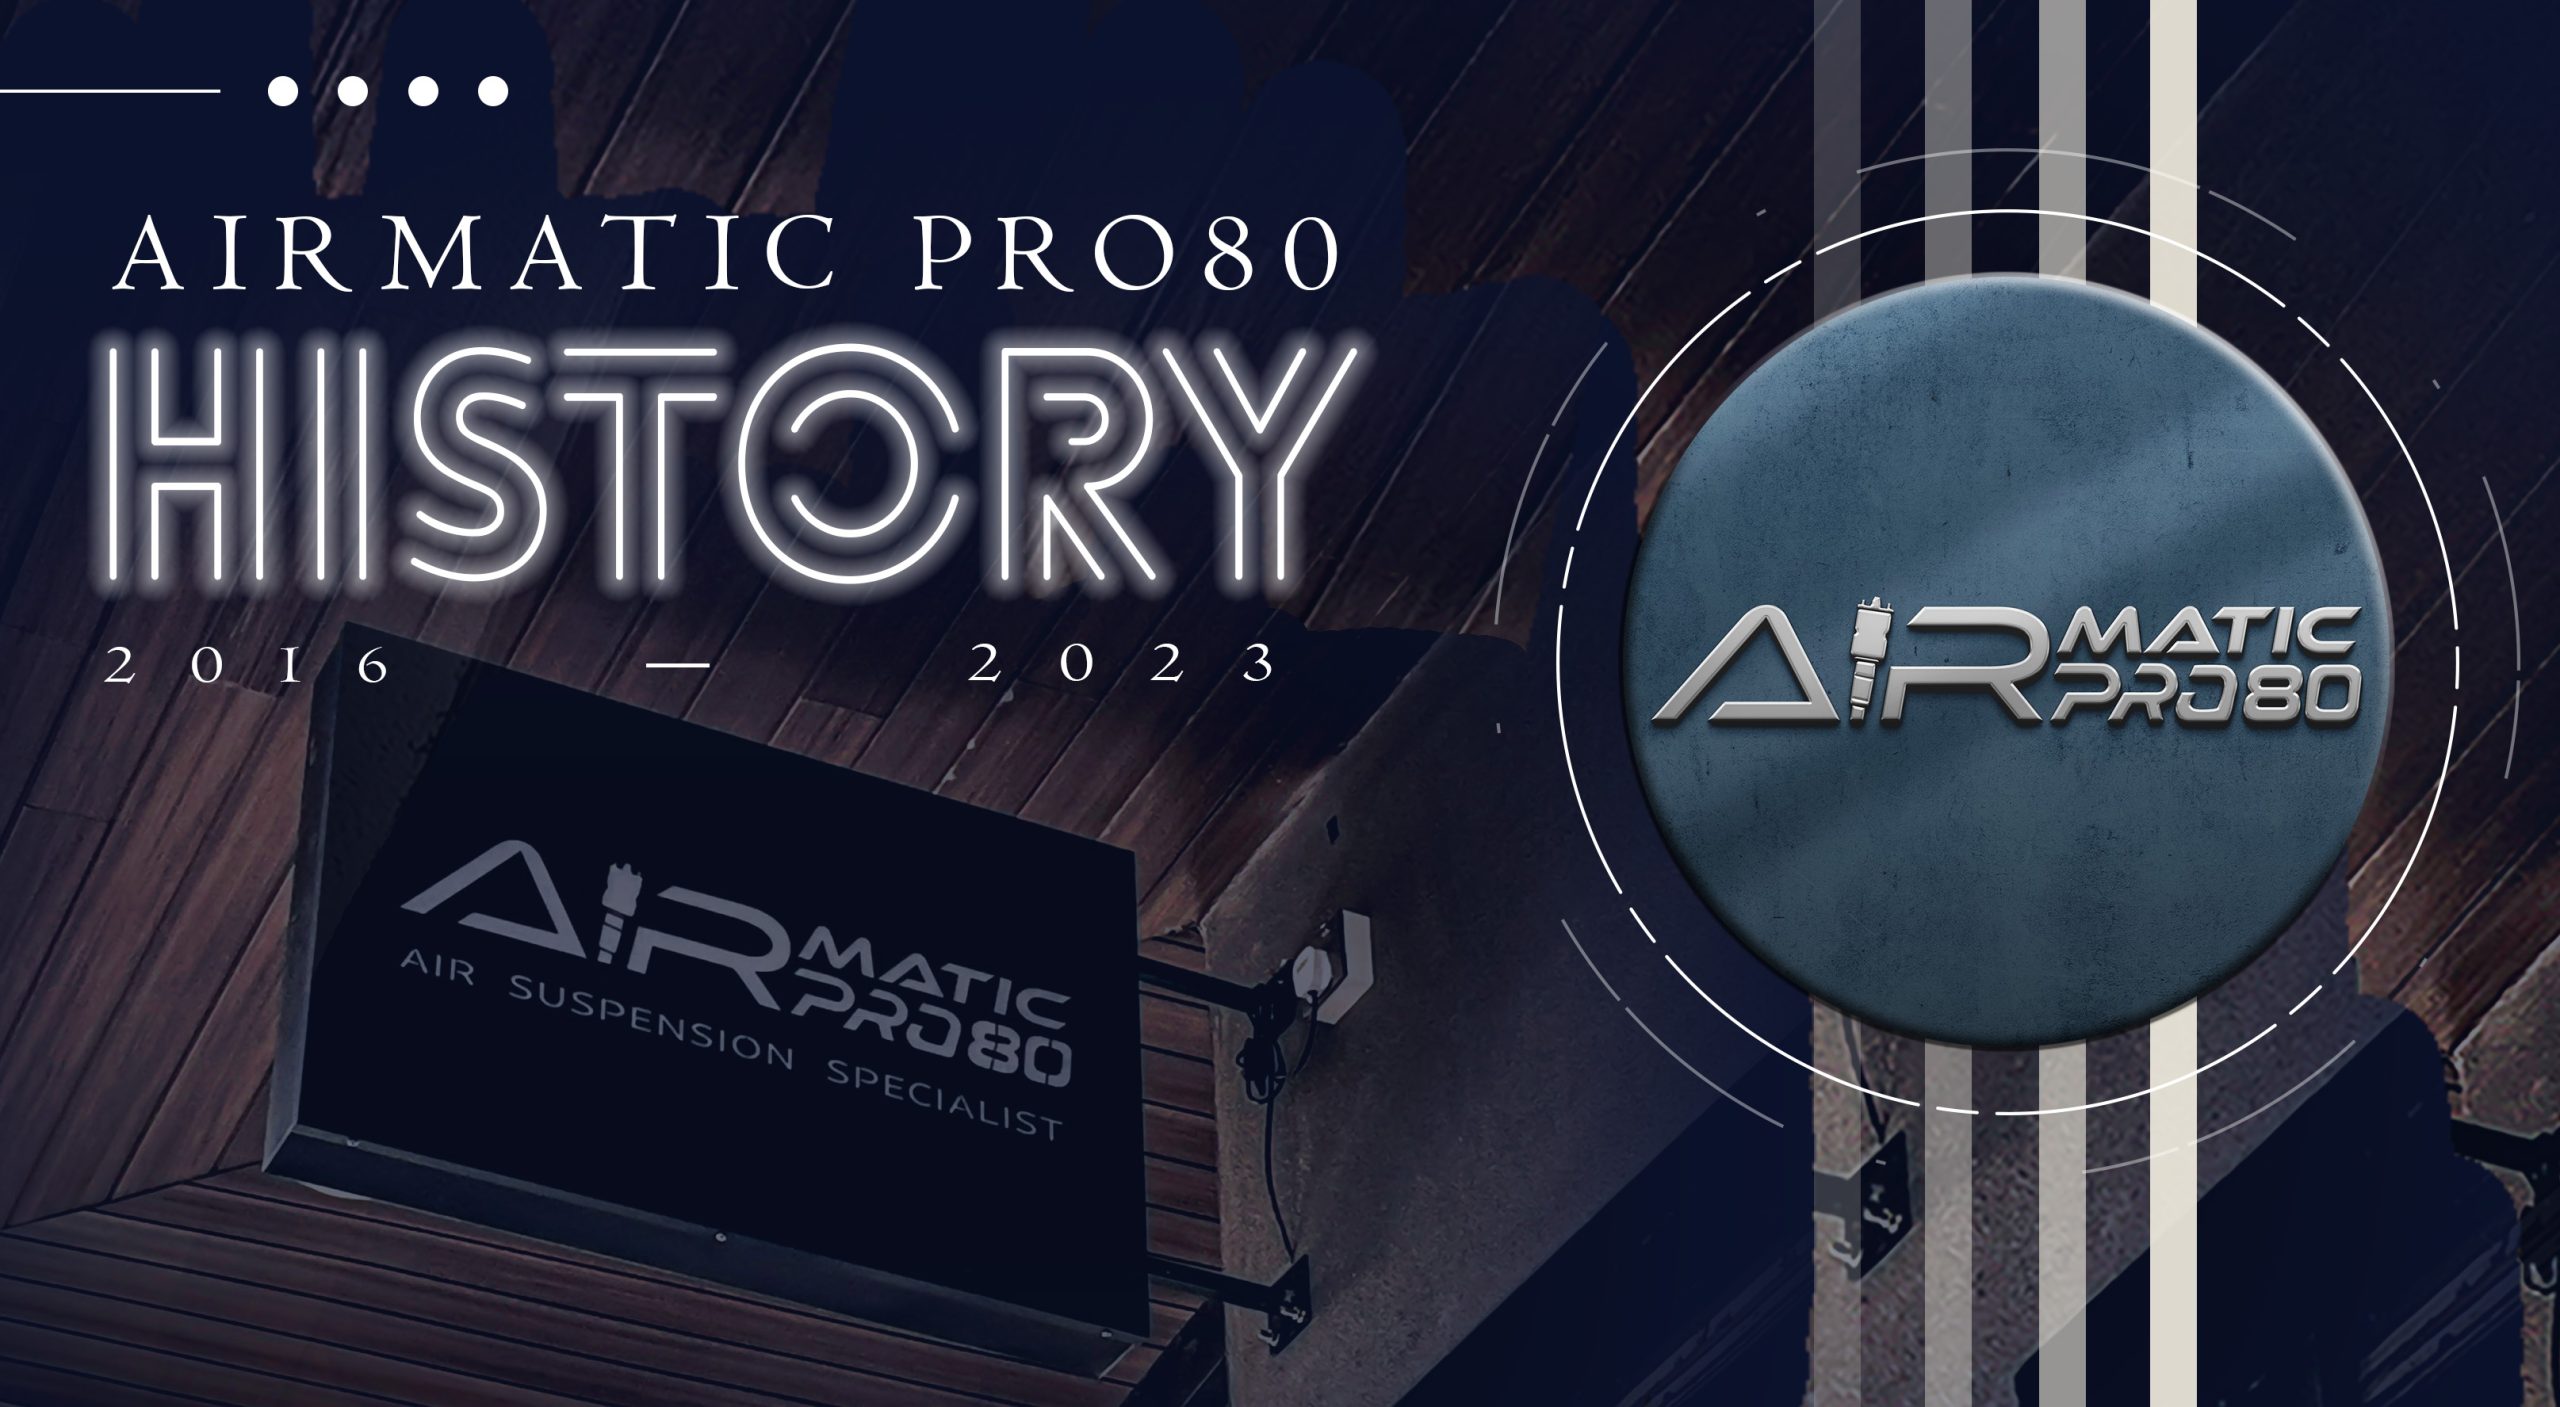 airmatic pro80 history